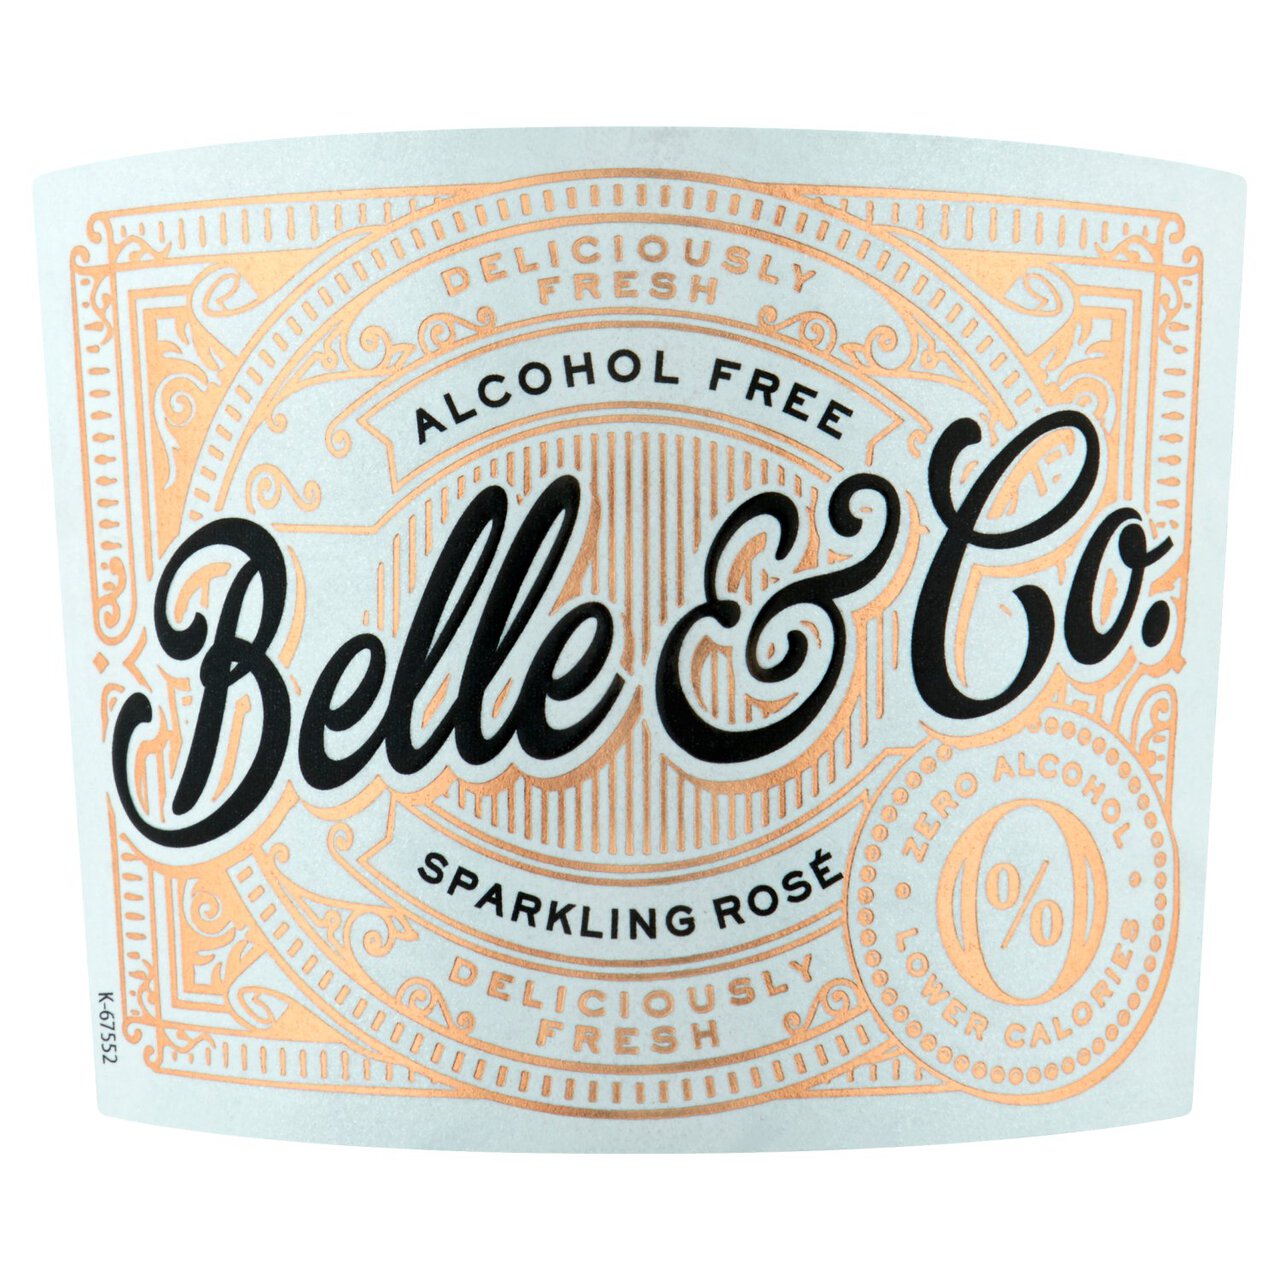 Belle & Co Rose Alcohol Free Sparkling Wine 75cl